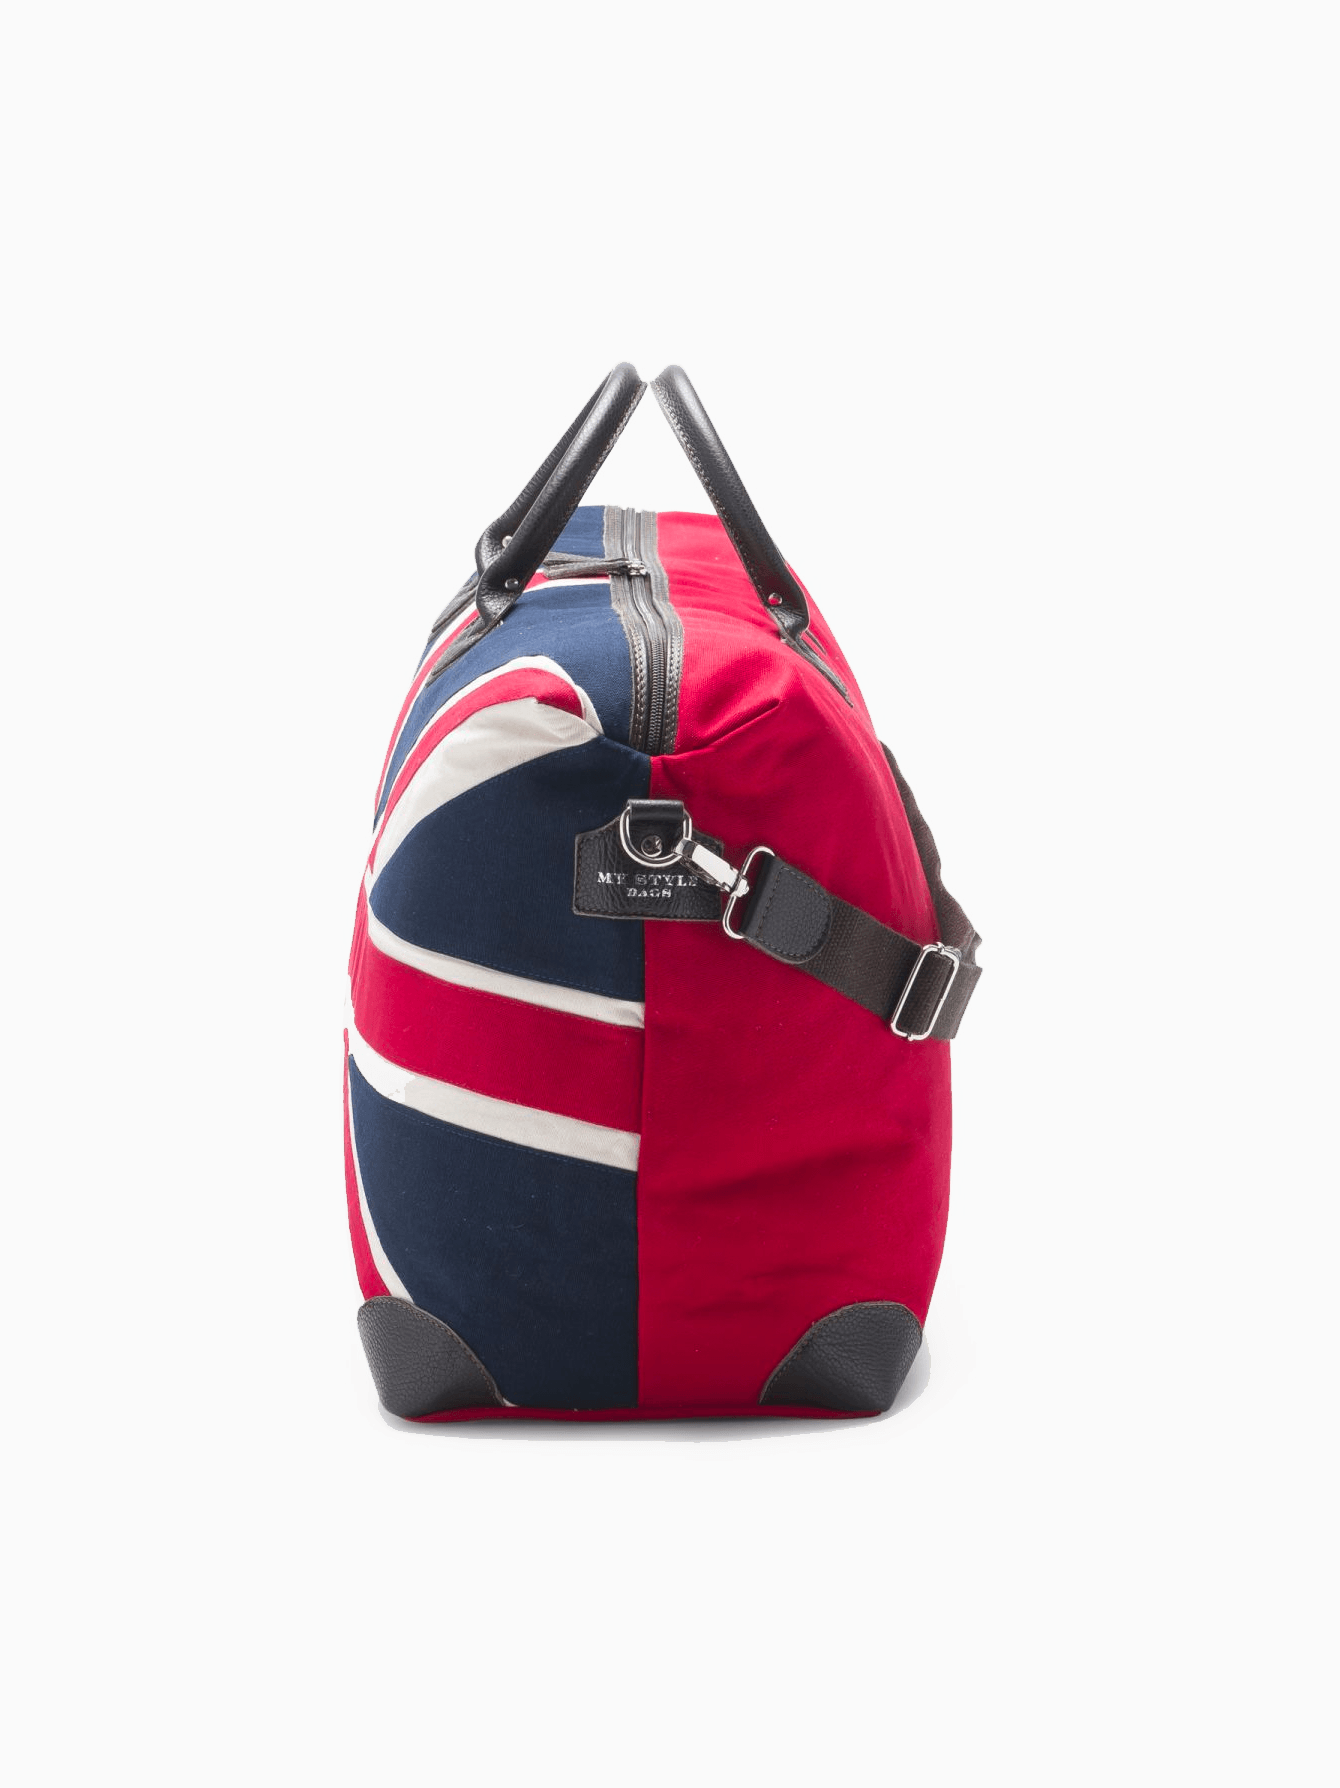 UK Flag Travel Bag